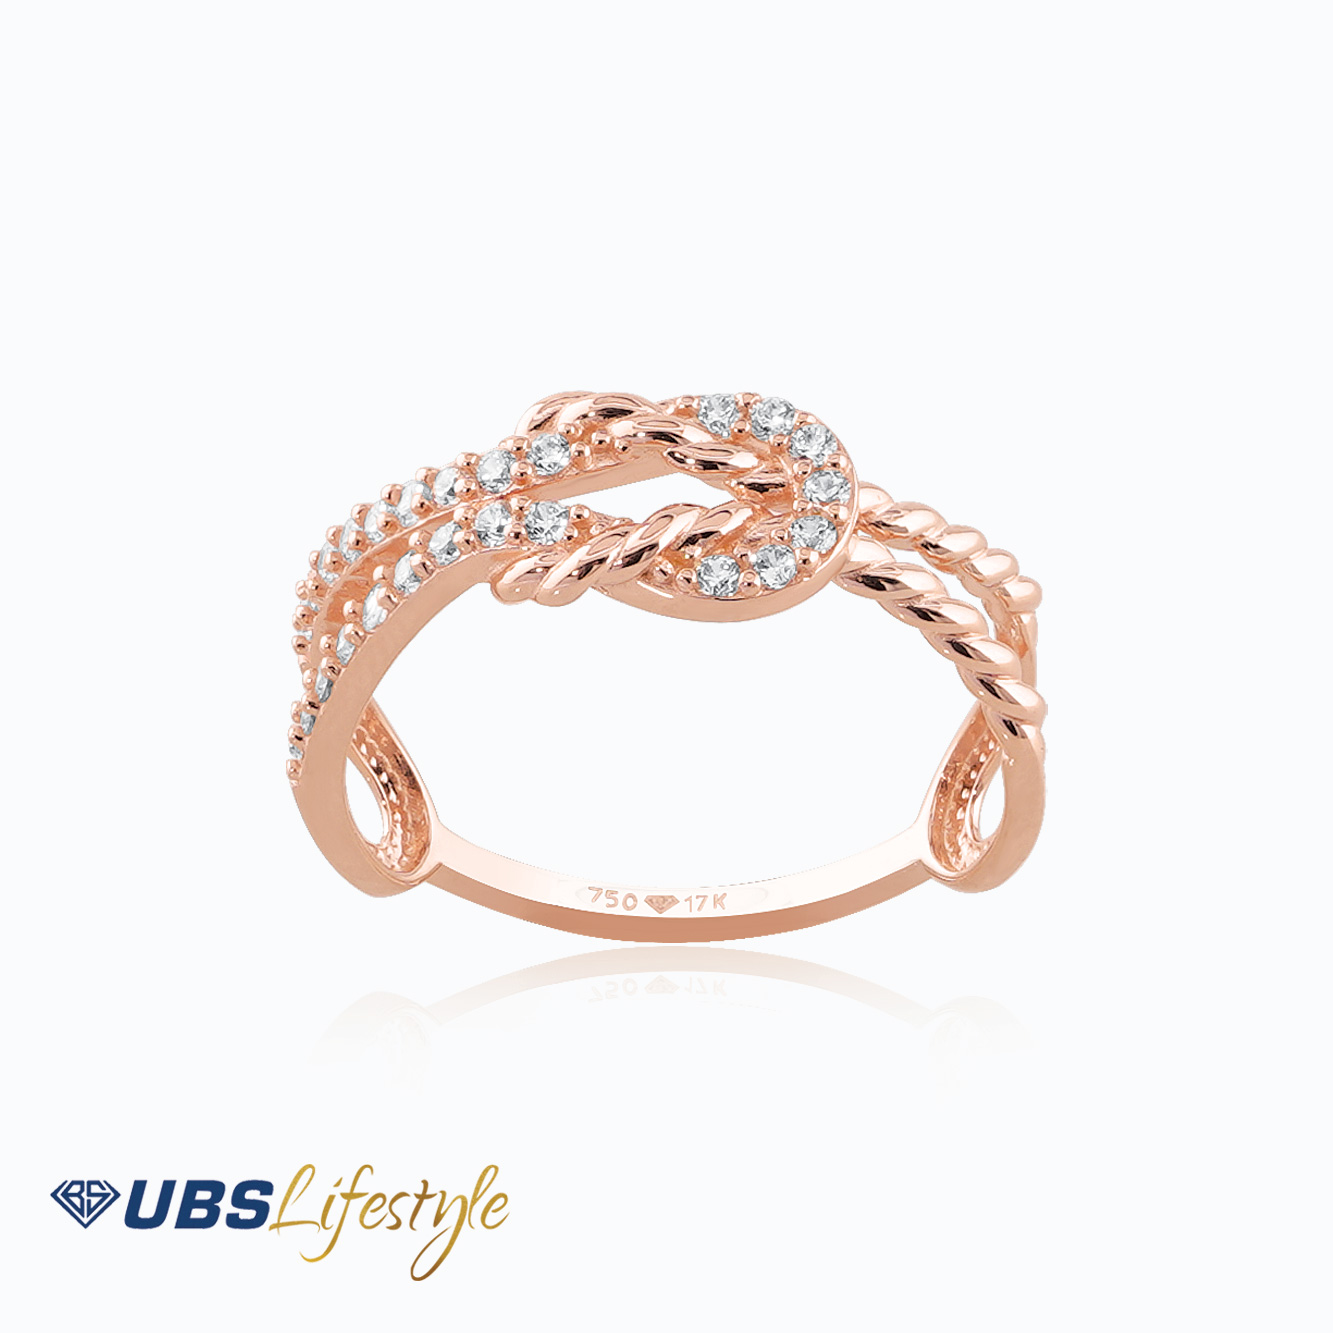 UBS Cincin Emas Knot - Ksc0861R - 17K